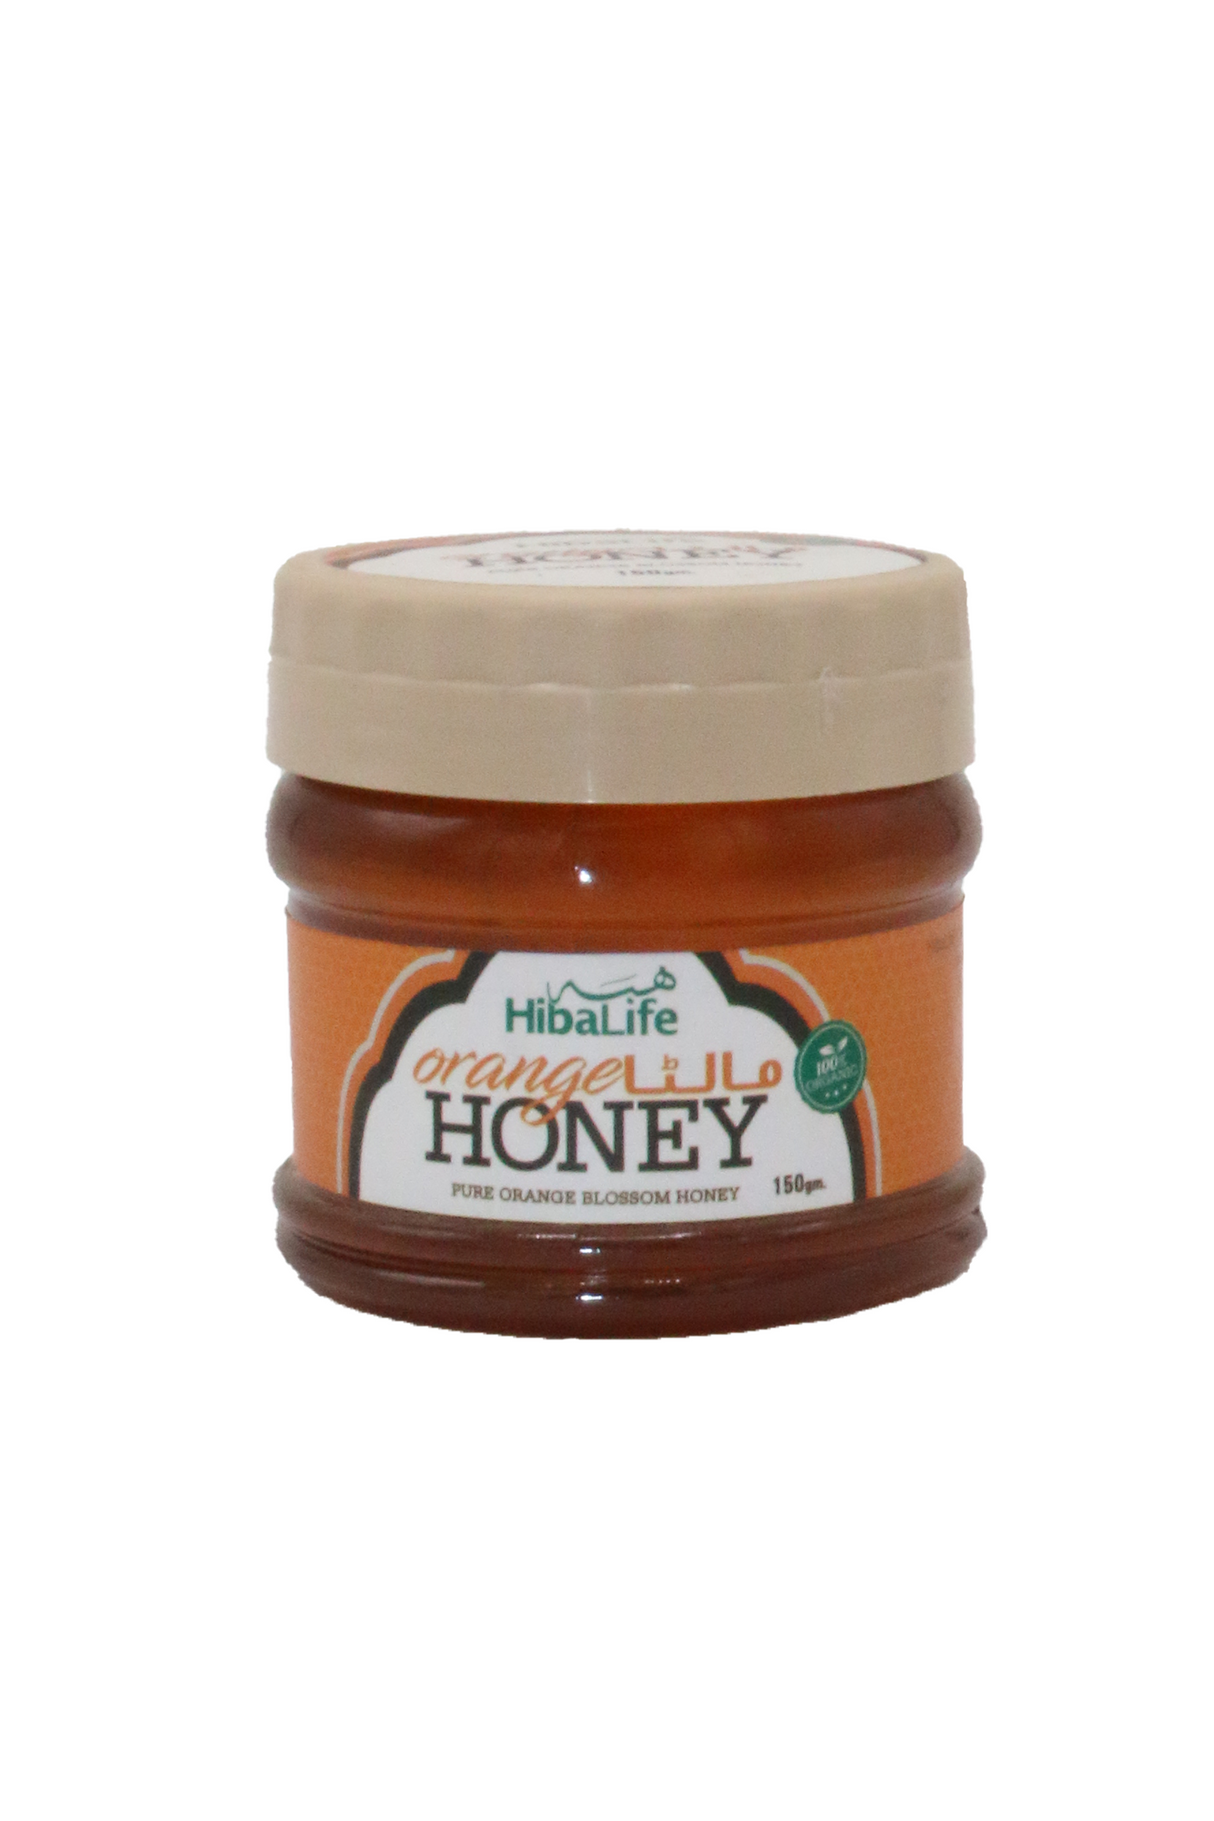 hiba life honey orange 150g